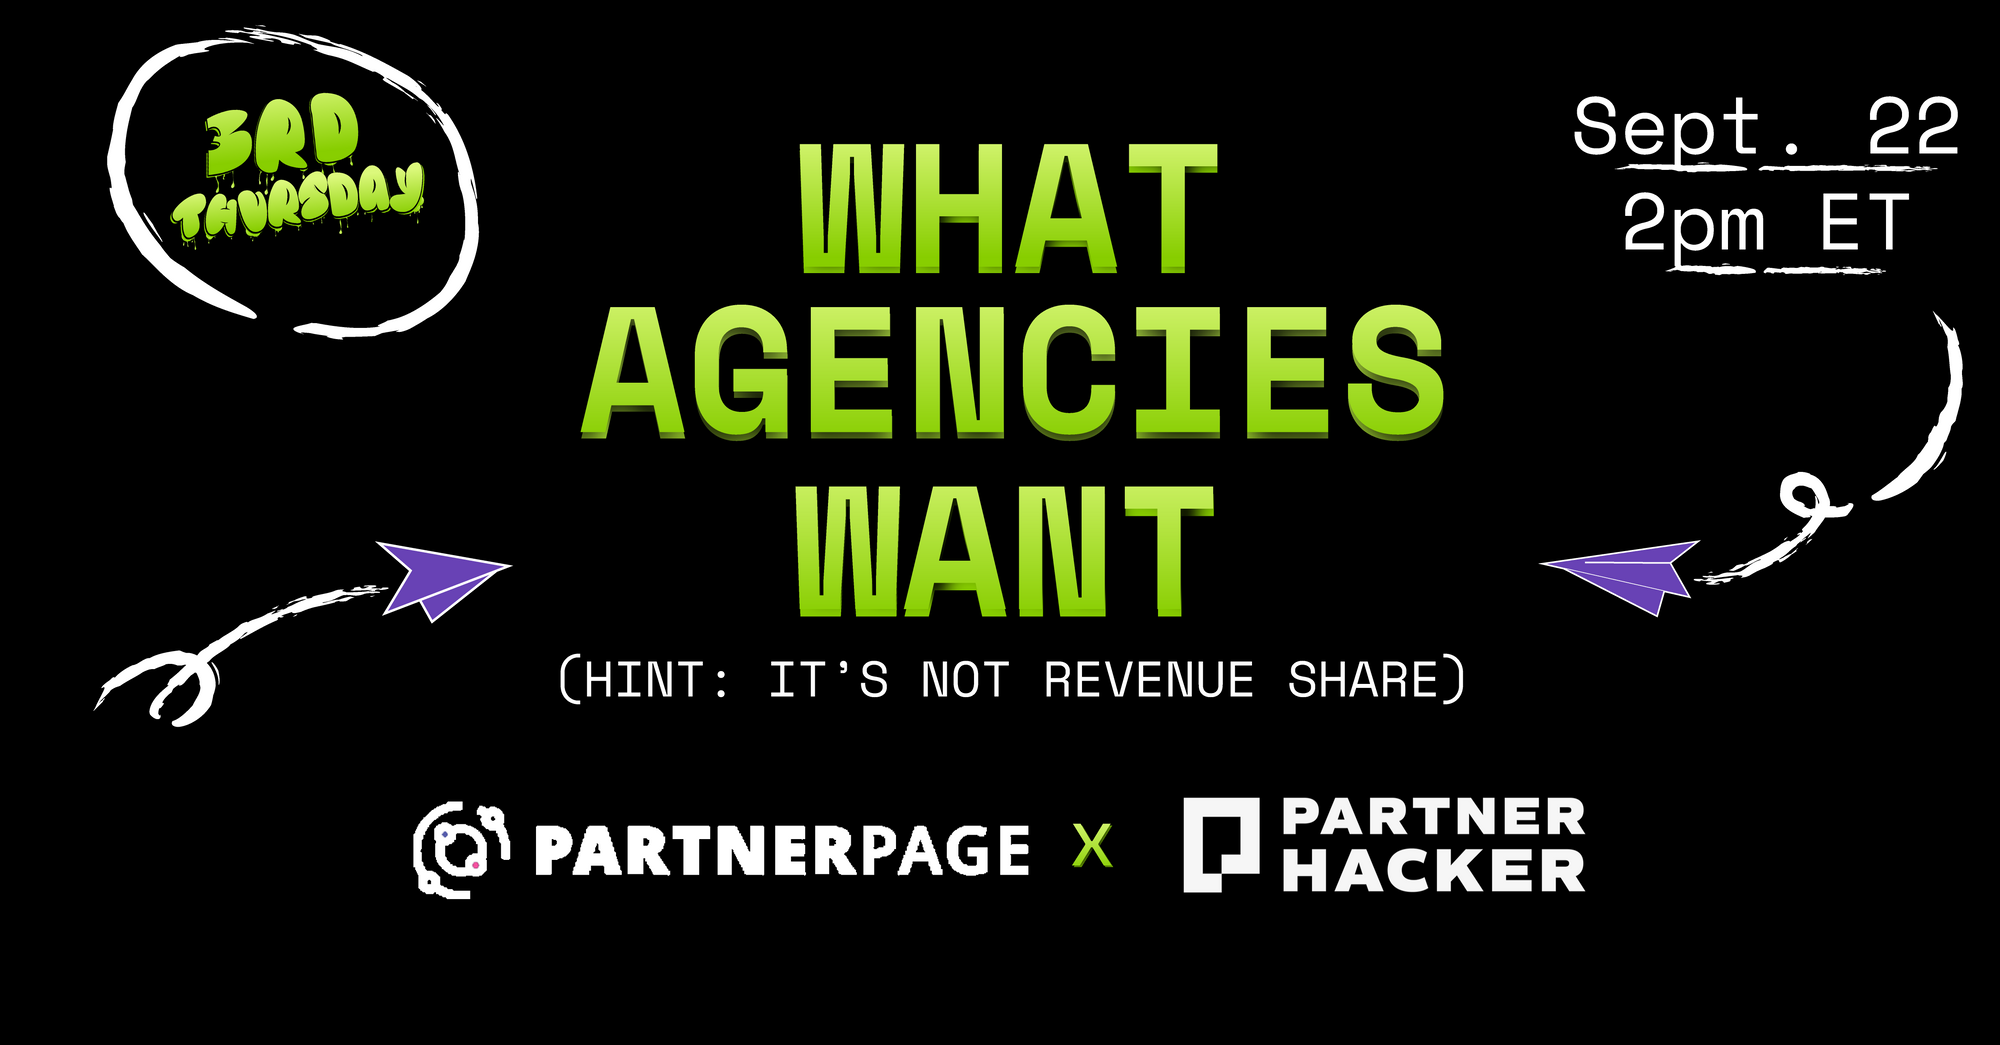 Captioned image: what agencies want, hint it's not revenue share. Sept 22, 2 PM ET